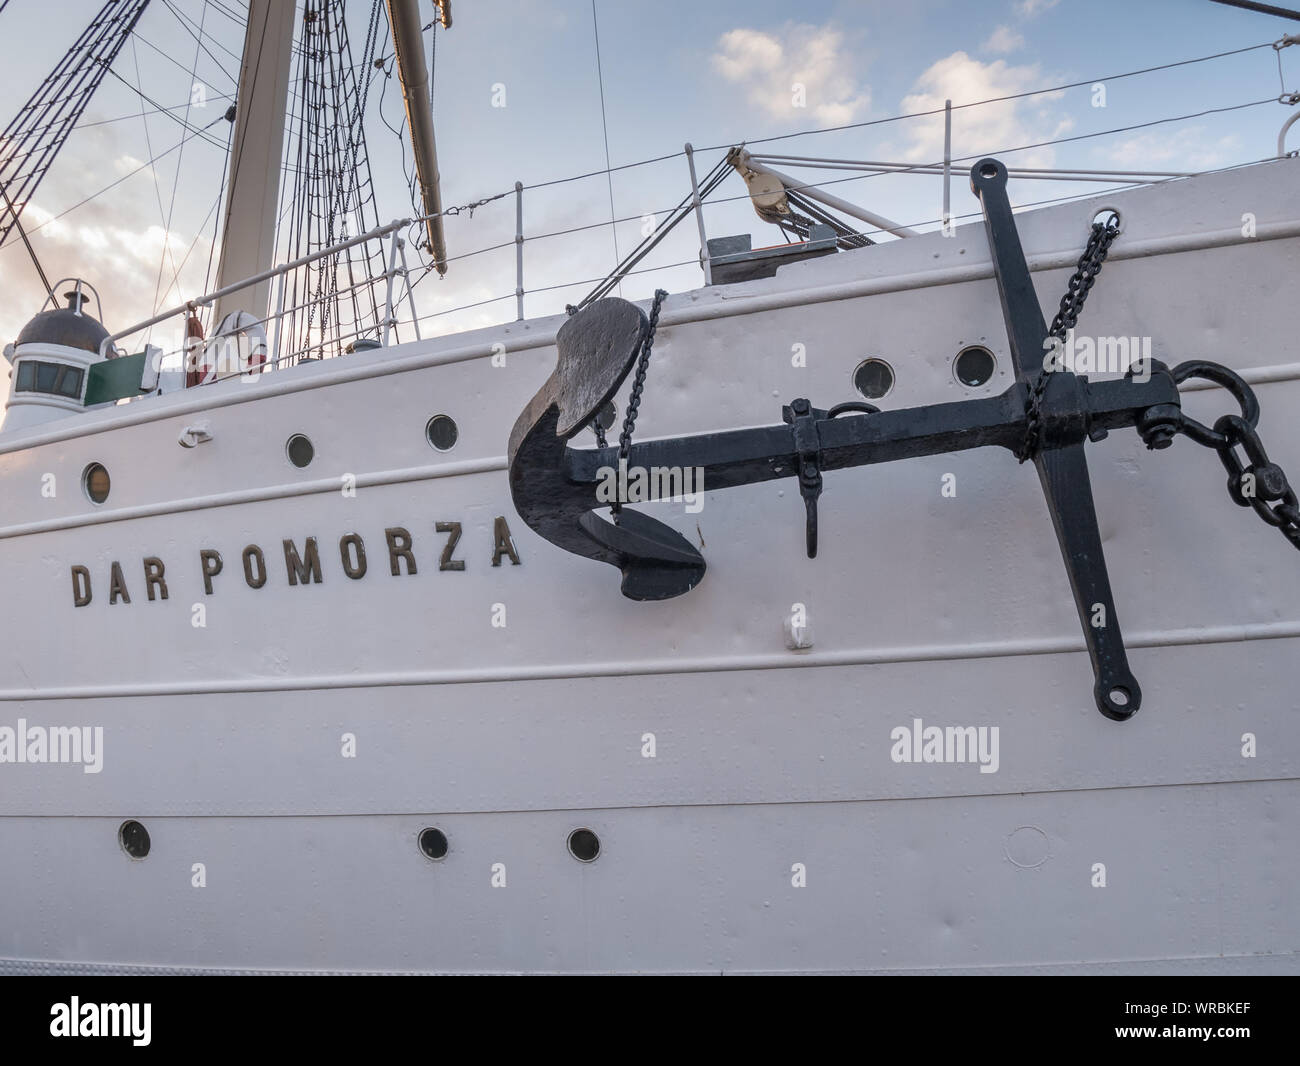 Anchor, Dar Pomorza (Gift of Pomerania) tall ship, Gdynia, Poland Stock Photo